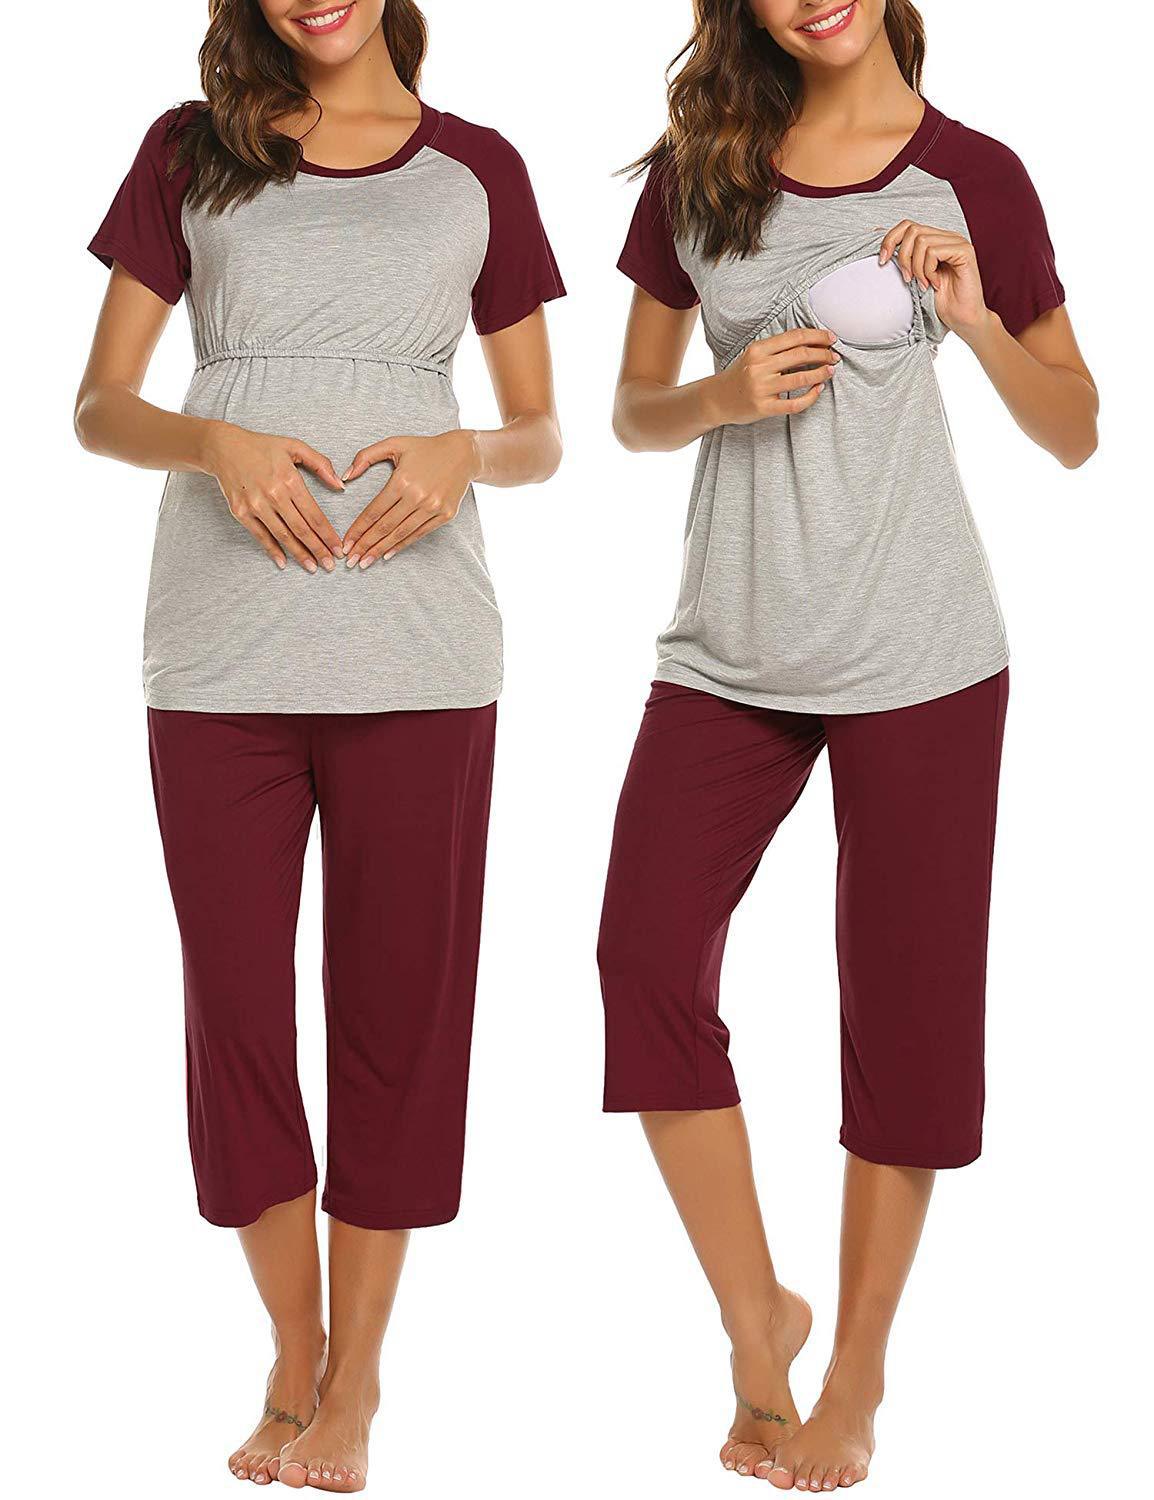 Maternity Short-sleeved Solid Color Stitching Nursing Tops Pajamas Set